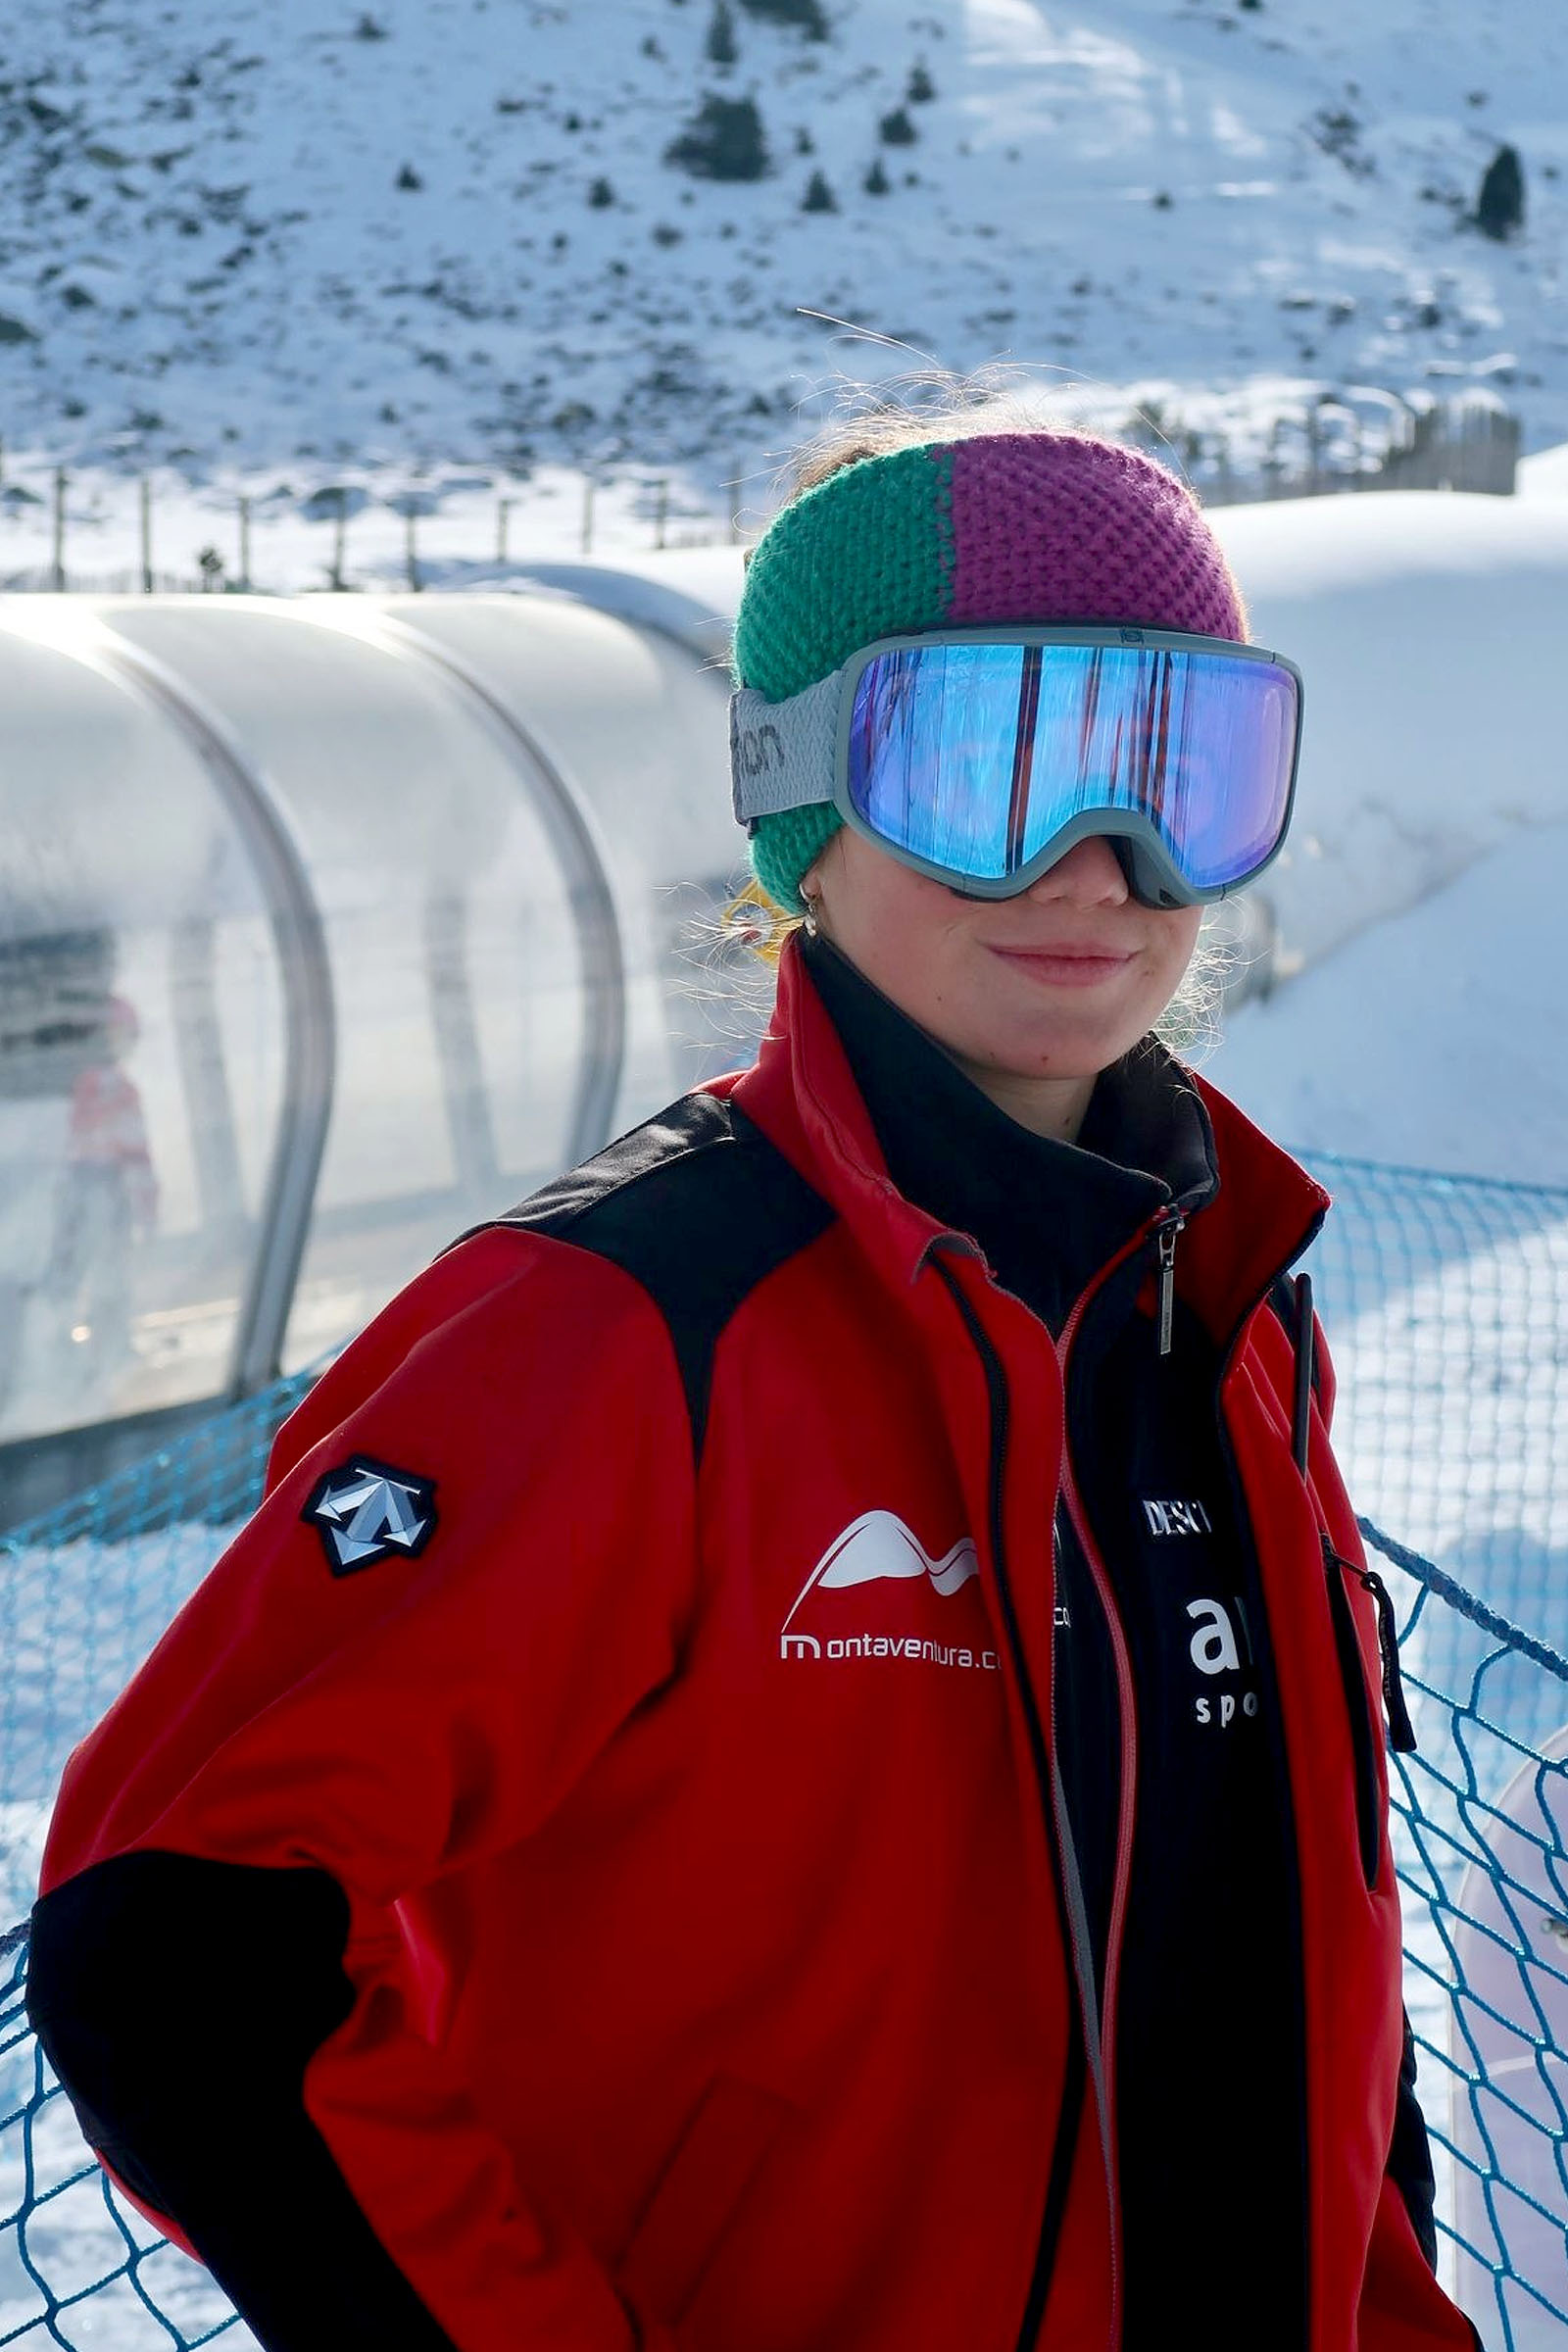 Ana, monitora de esquí en Montaventura